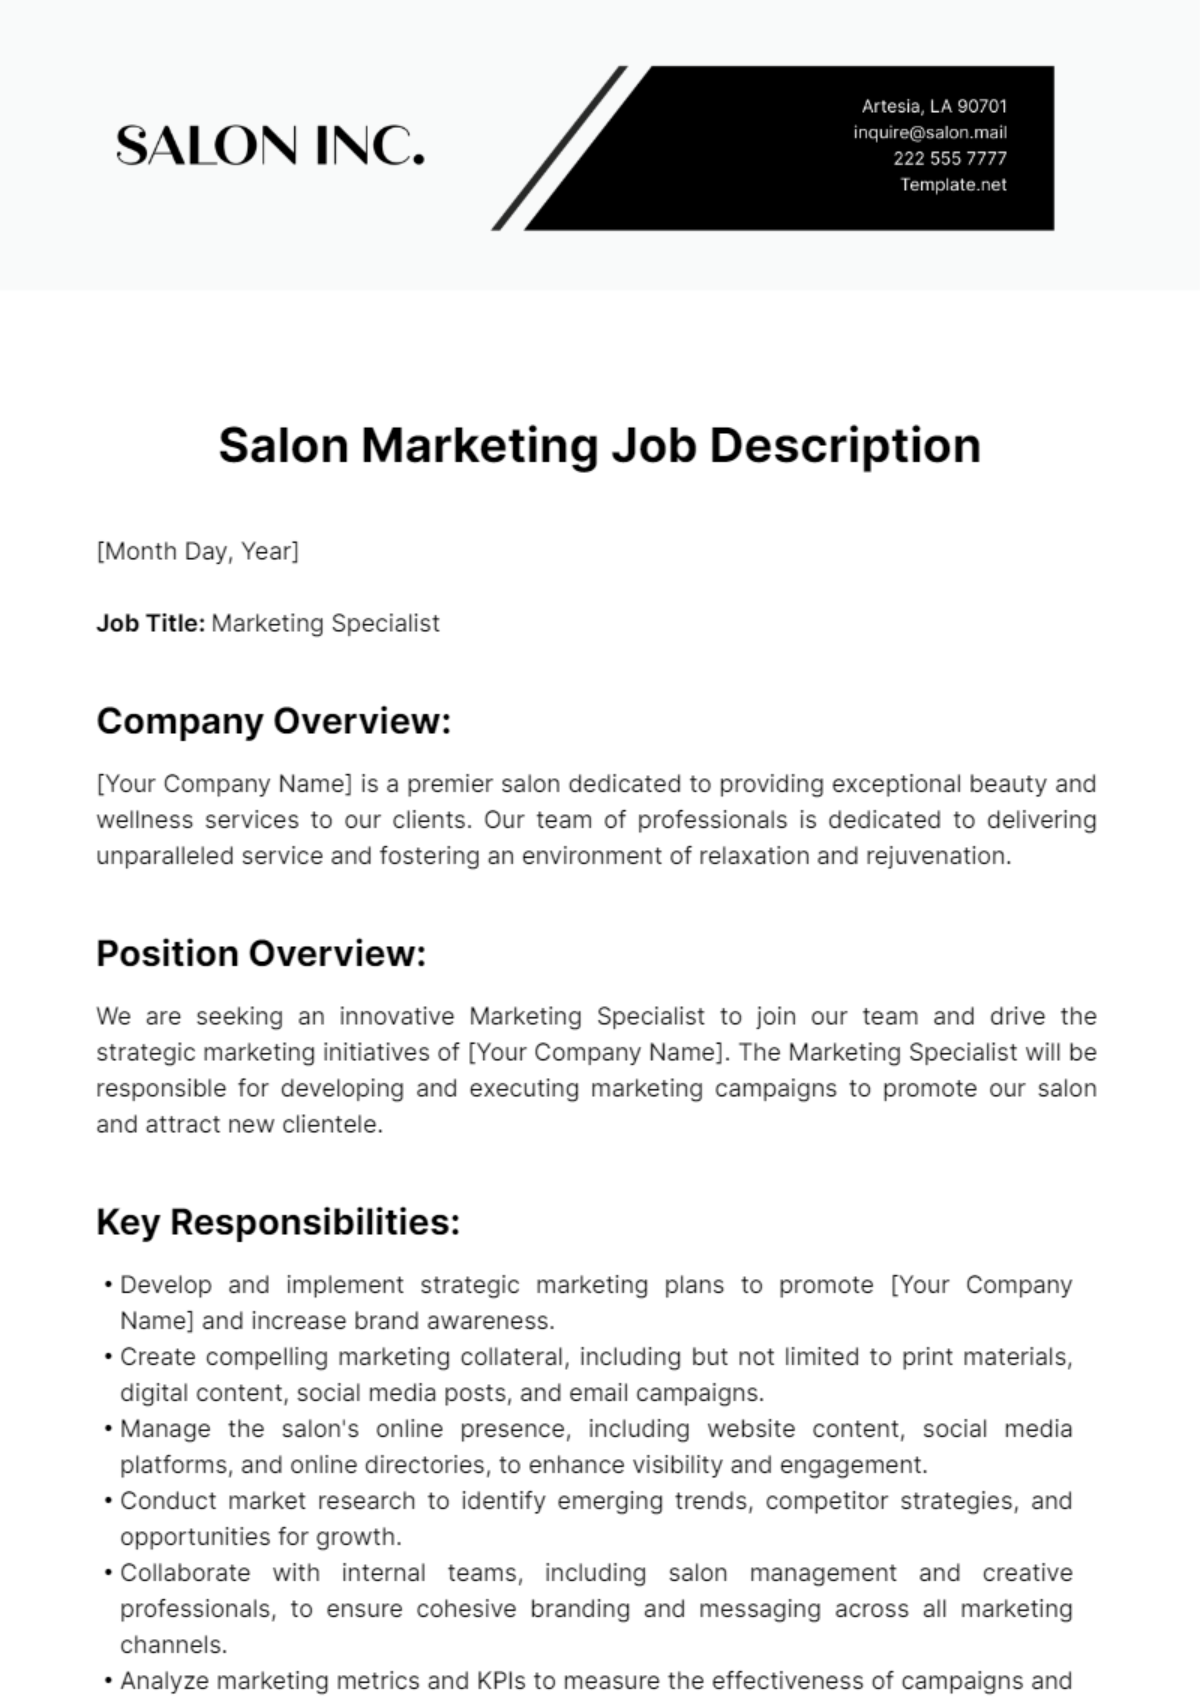 Free Salon Marketing Job Description Template